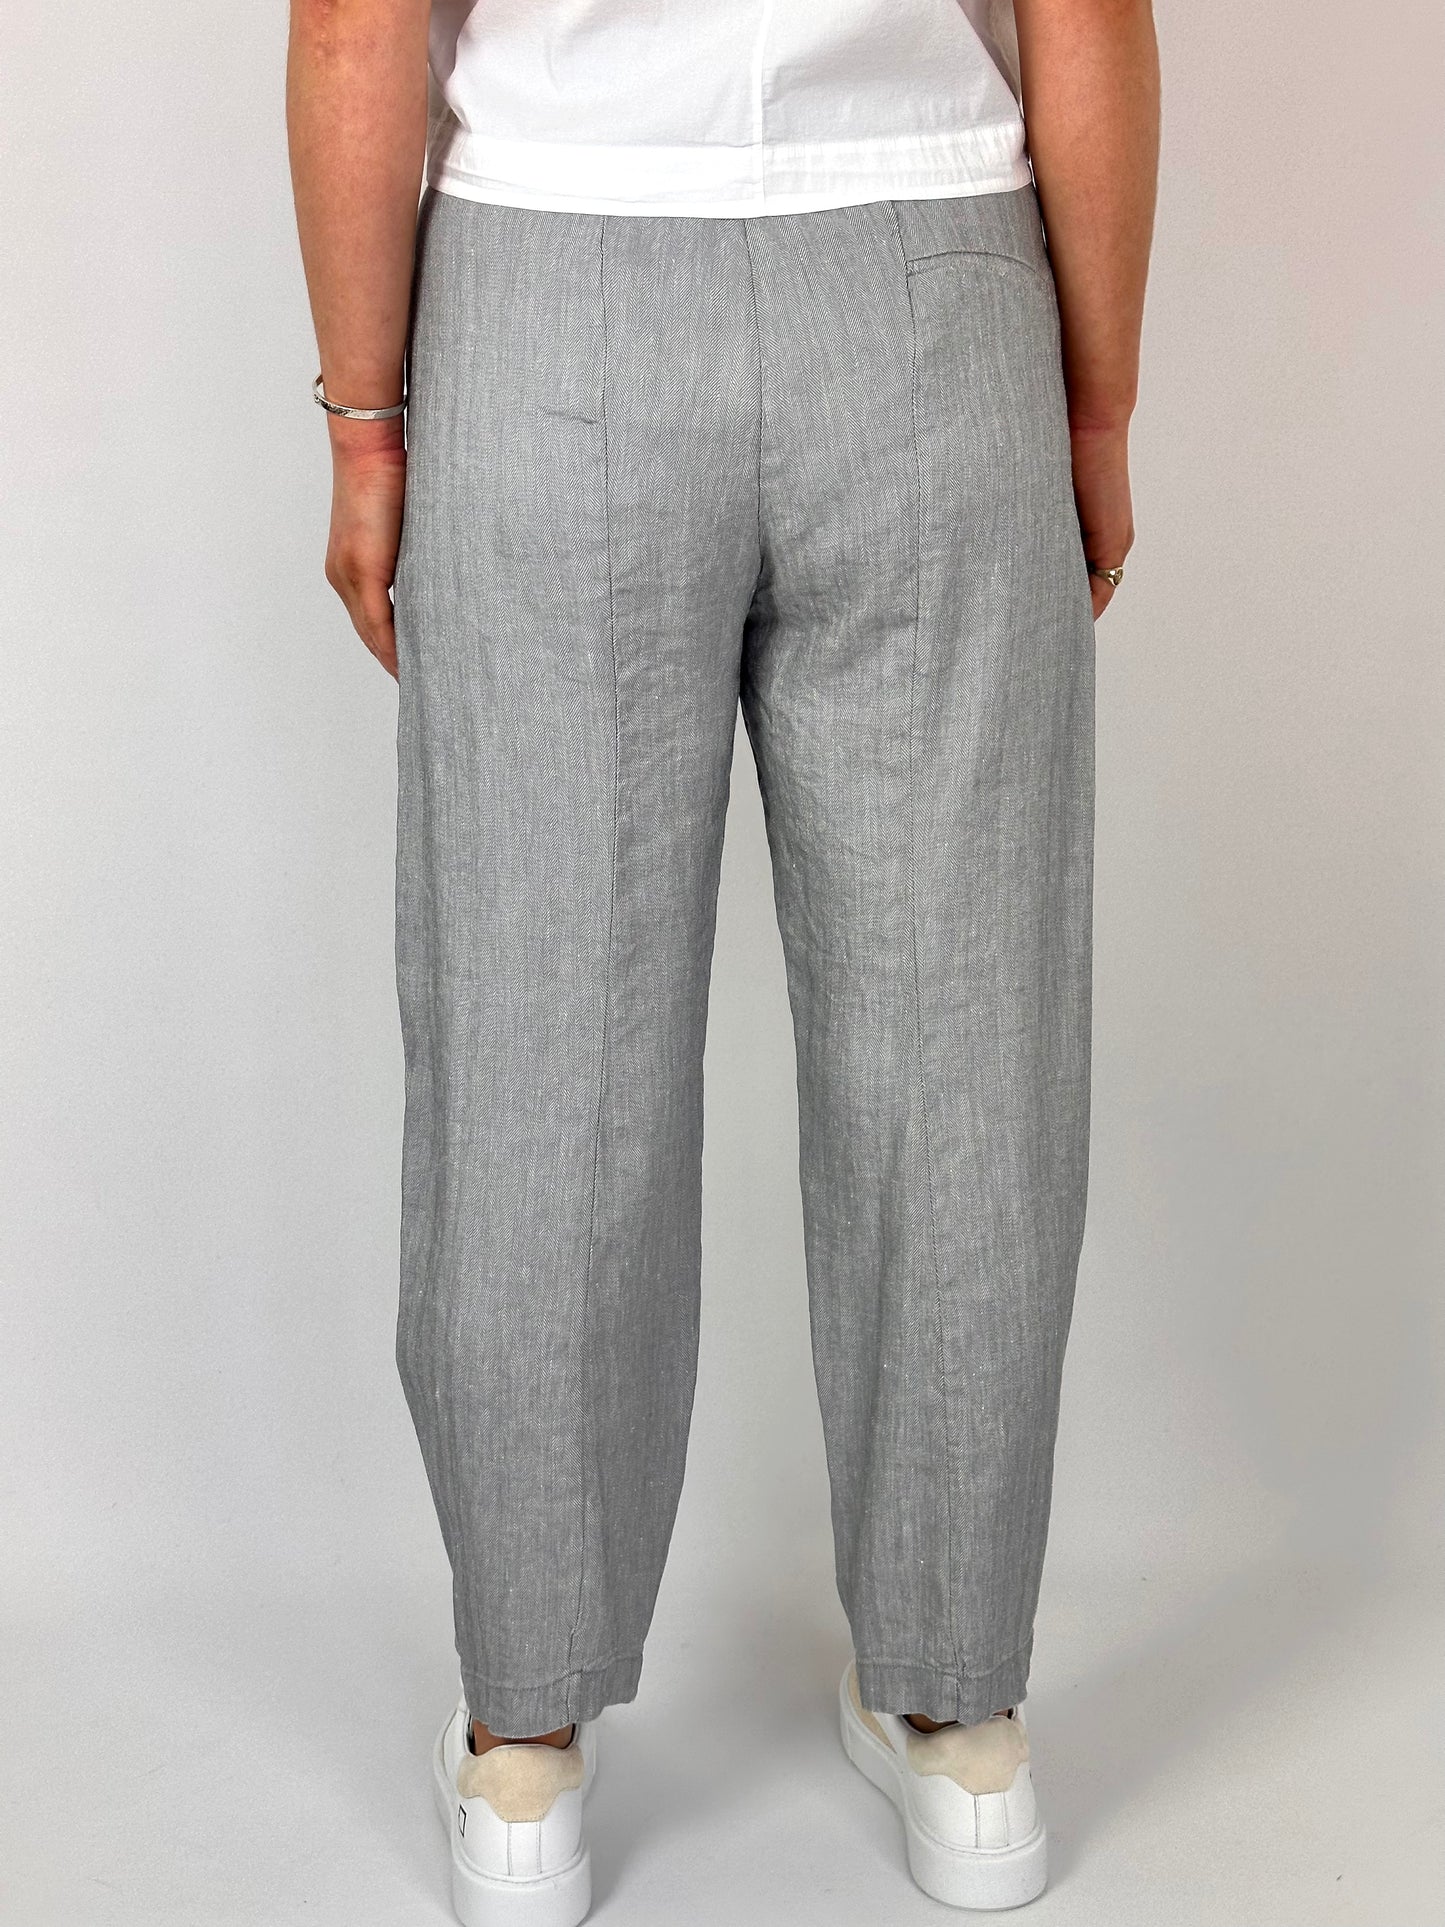 TPS G161 Trousers Light Grey